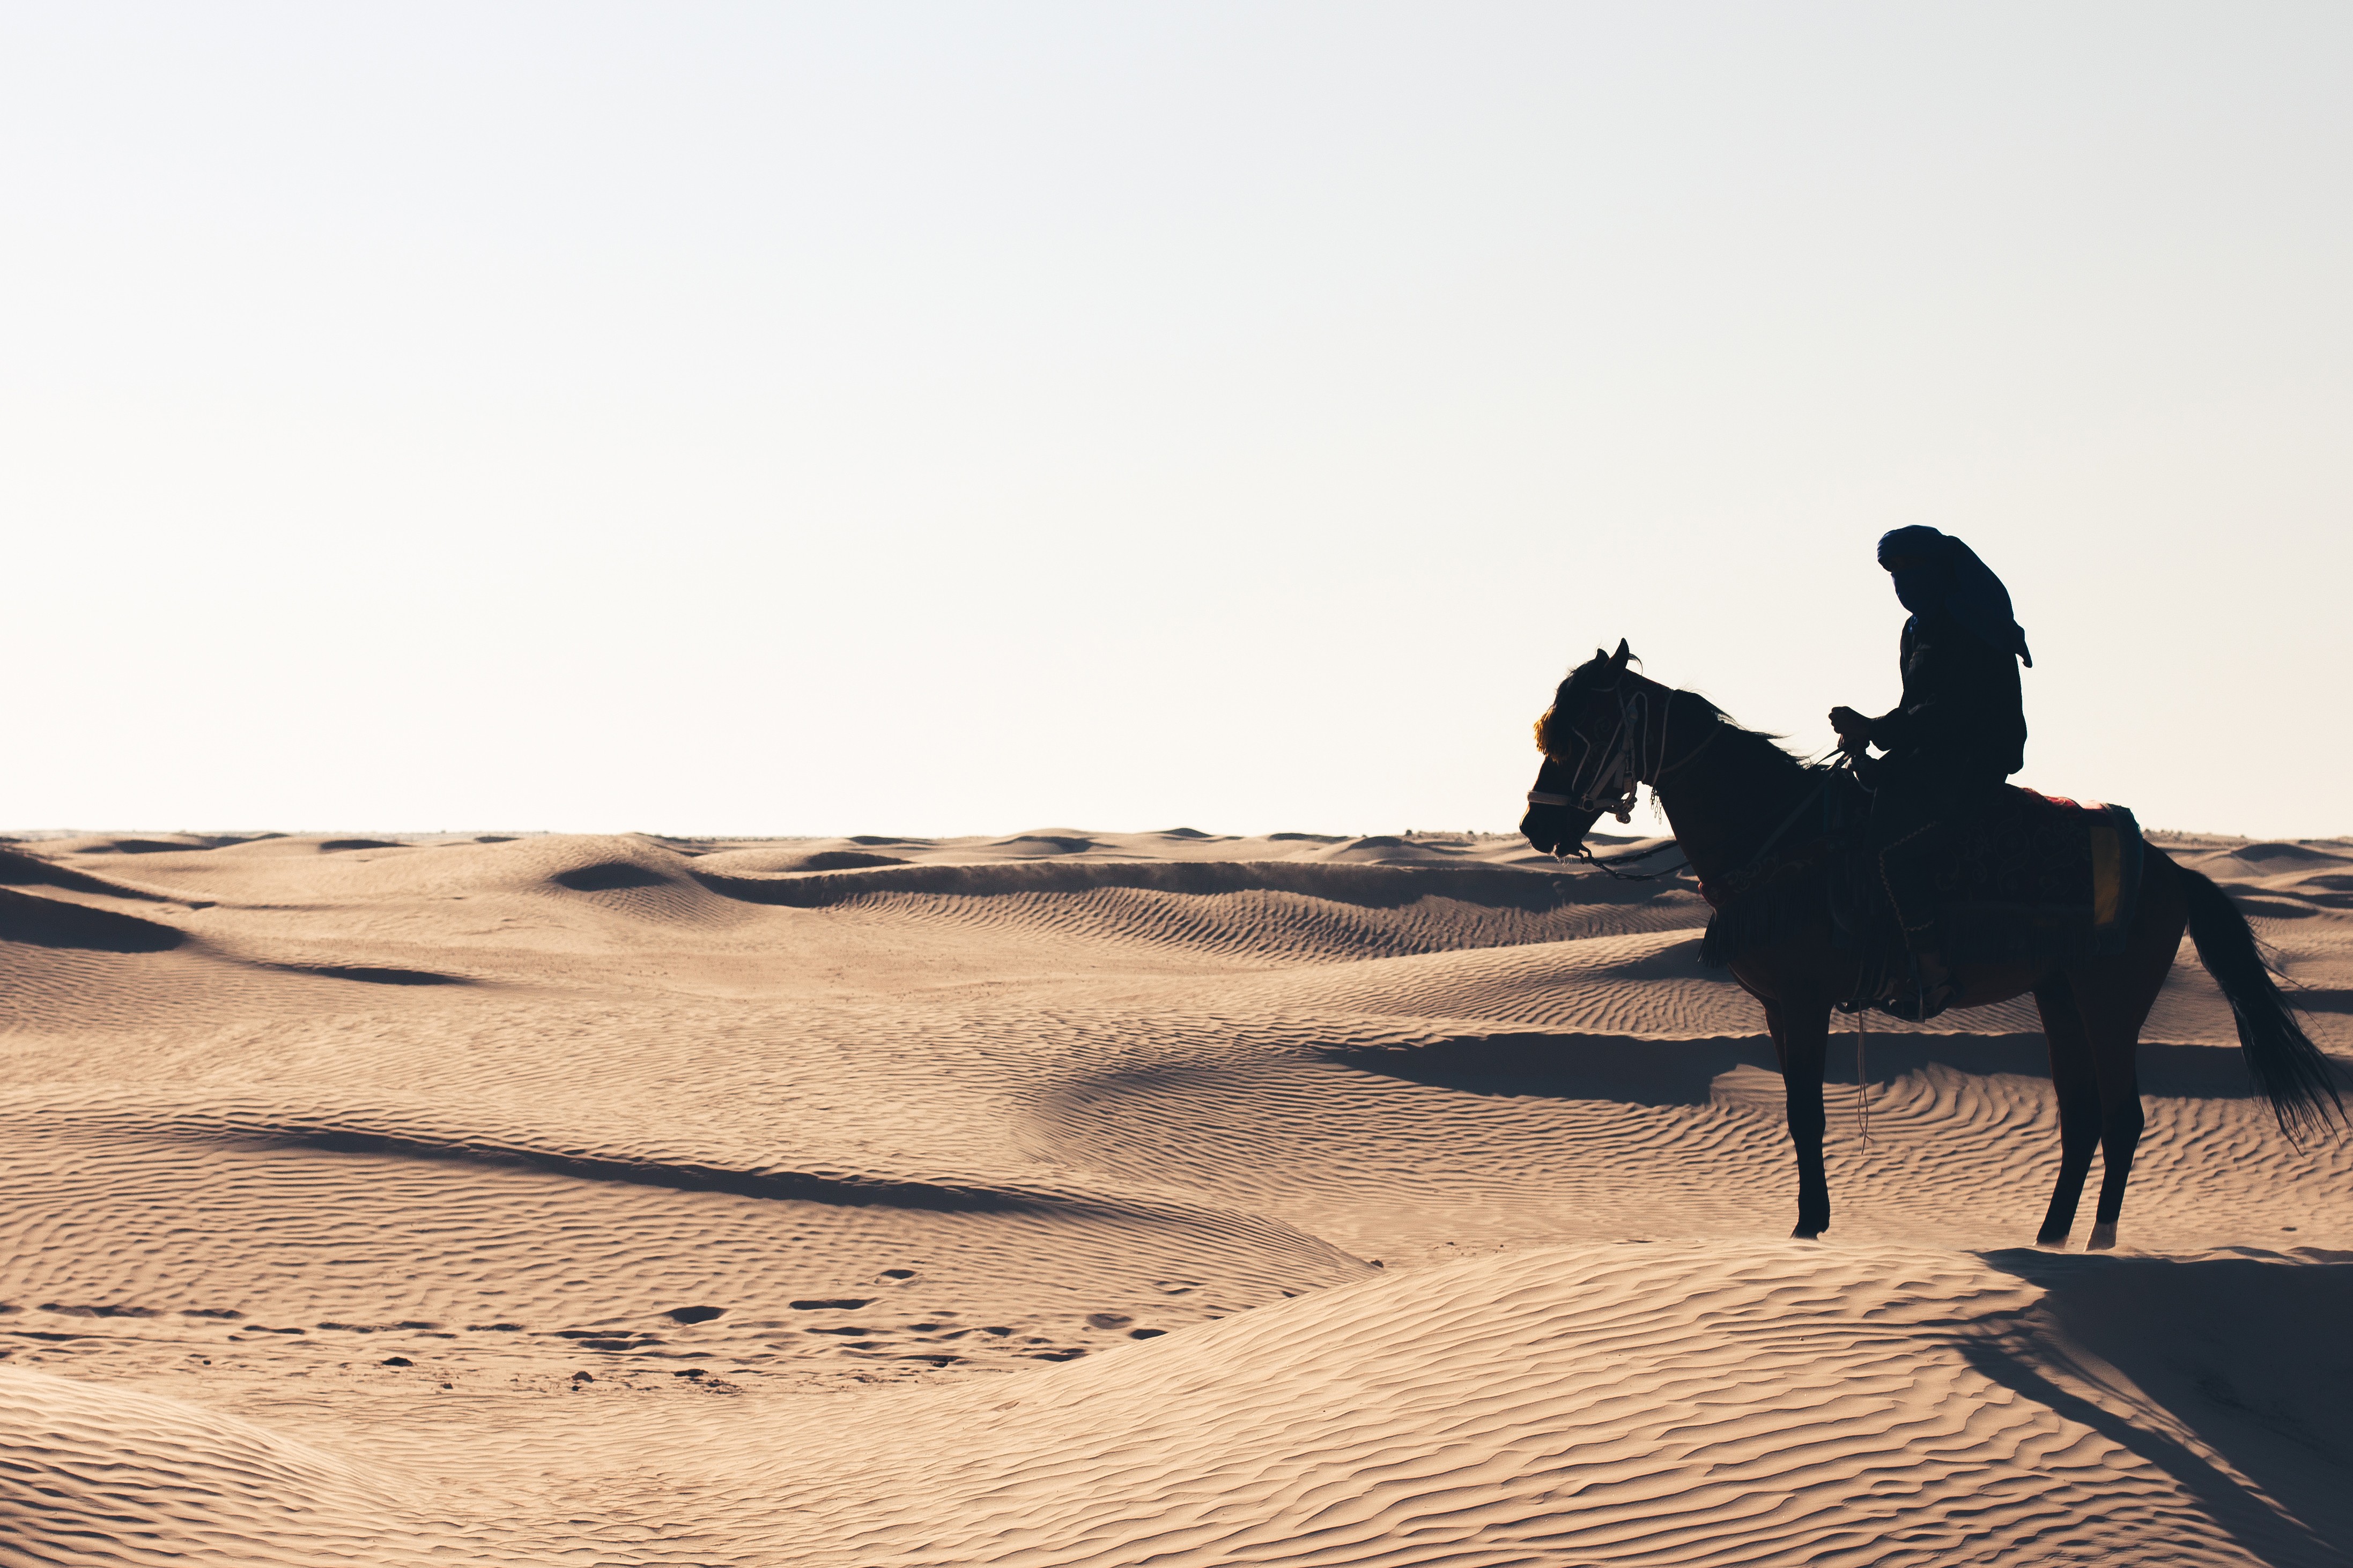 Arab riding